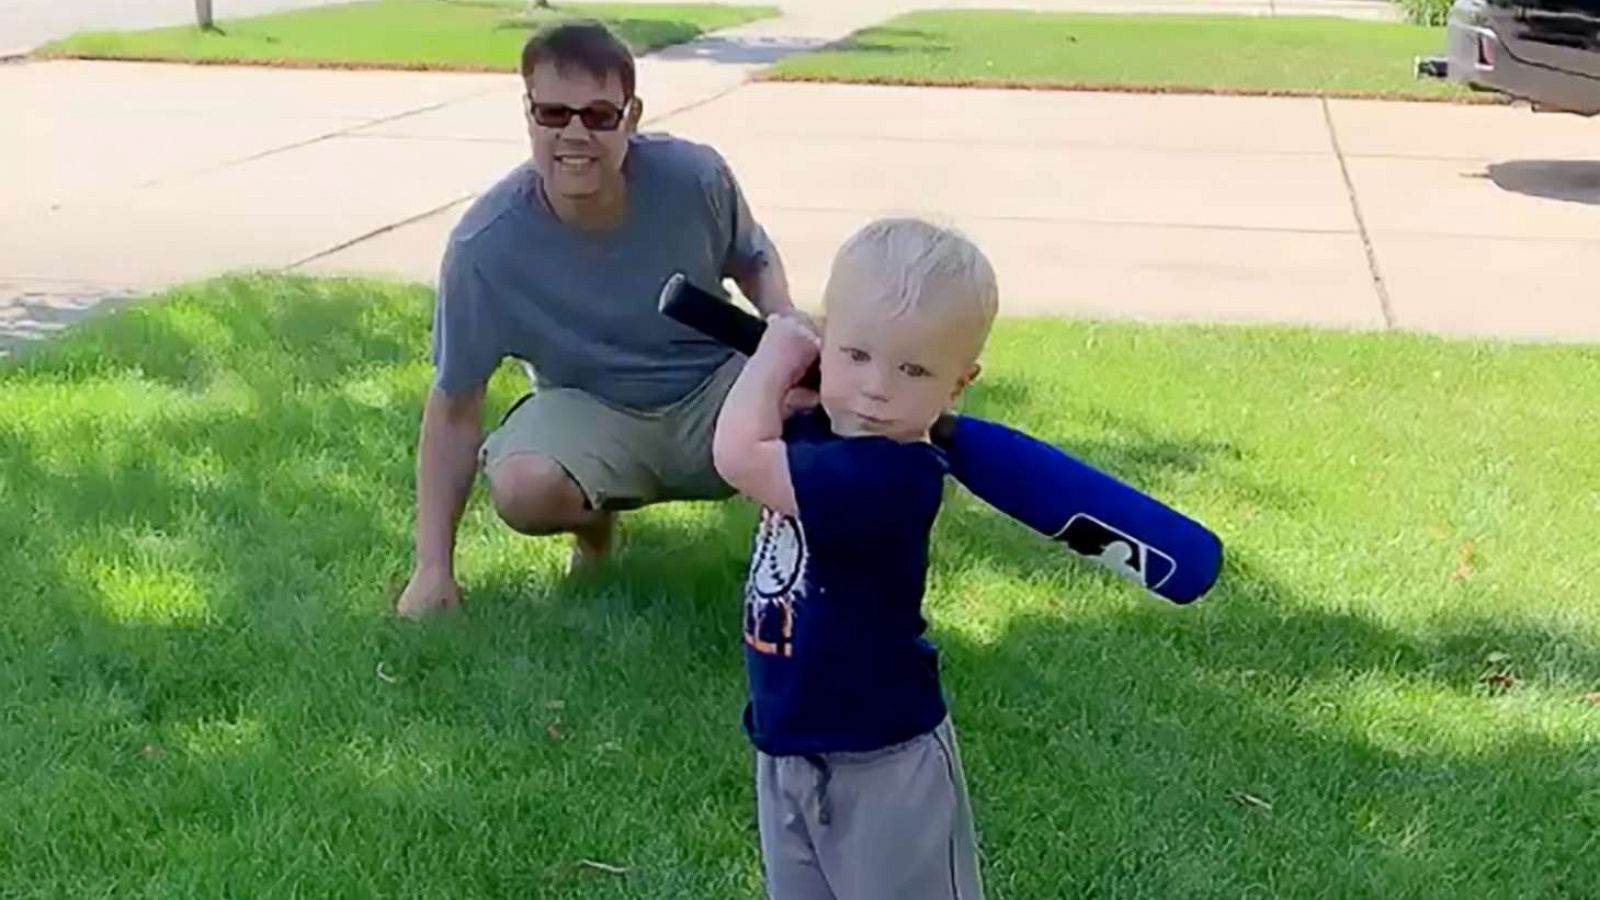 Toddler swings baseball bat like a star slugger - ABC News